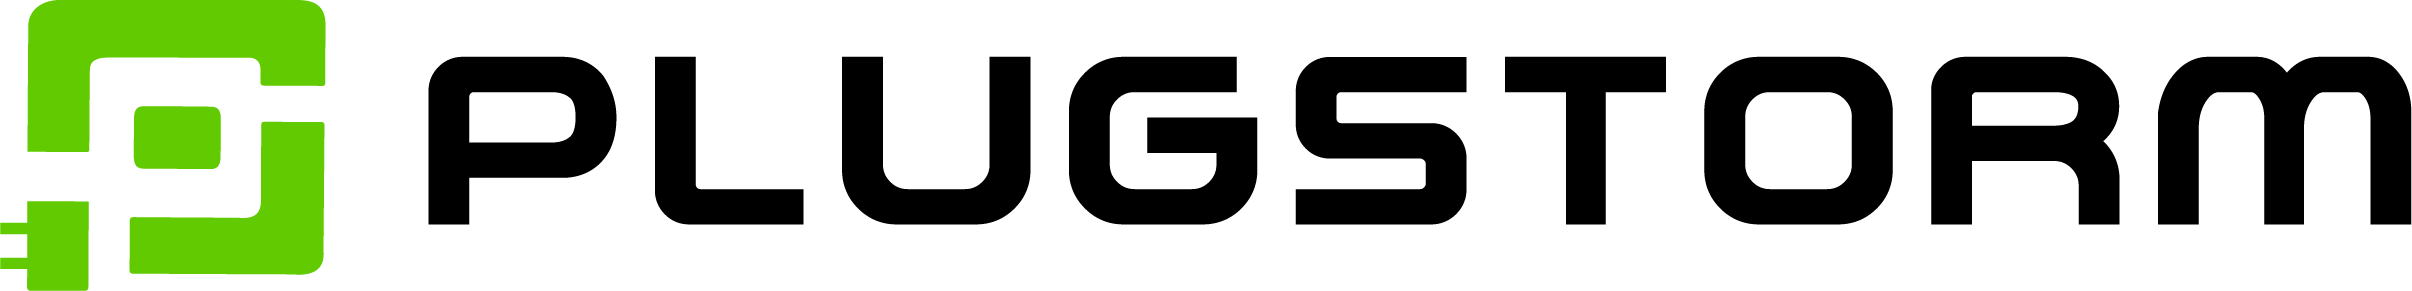 Plugstorm logo